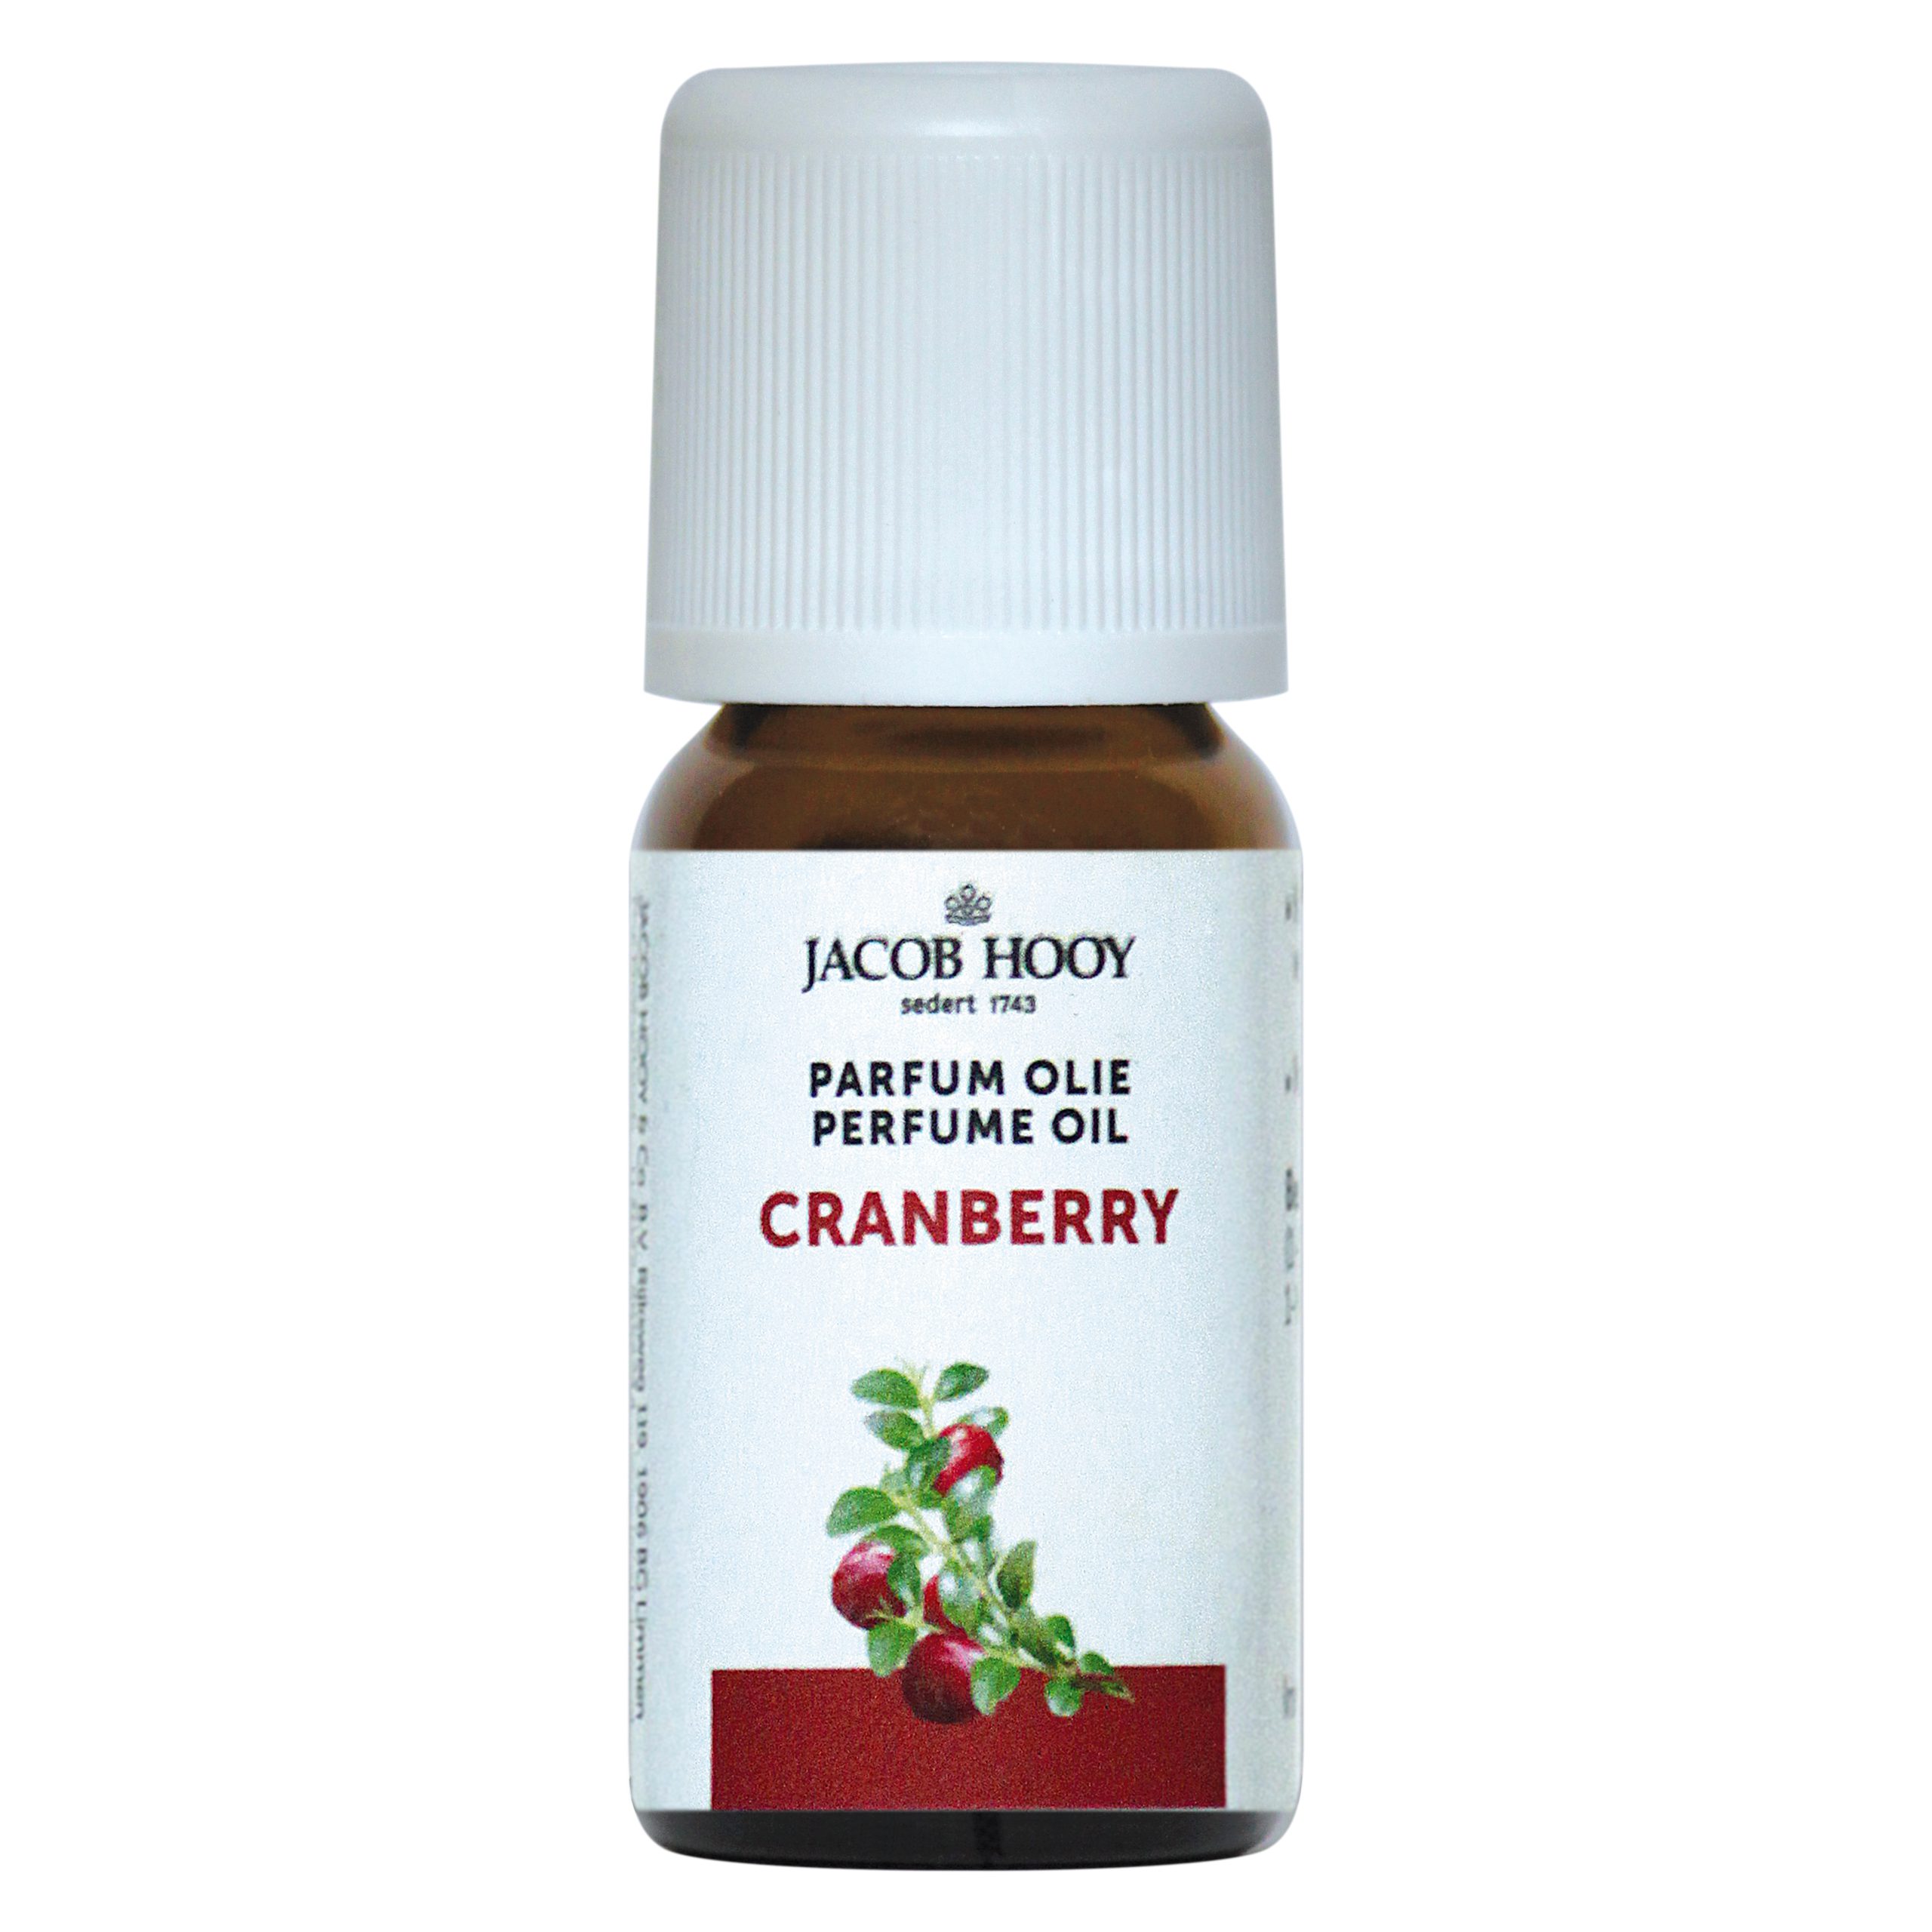 Cranberry parfum olie 10 ml